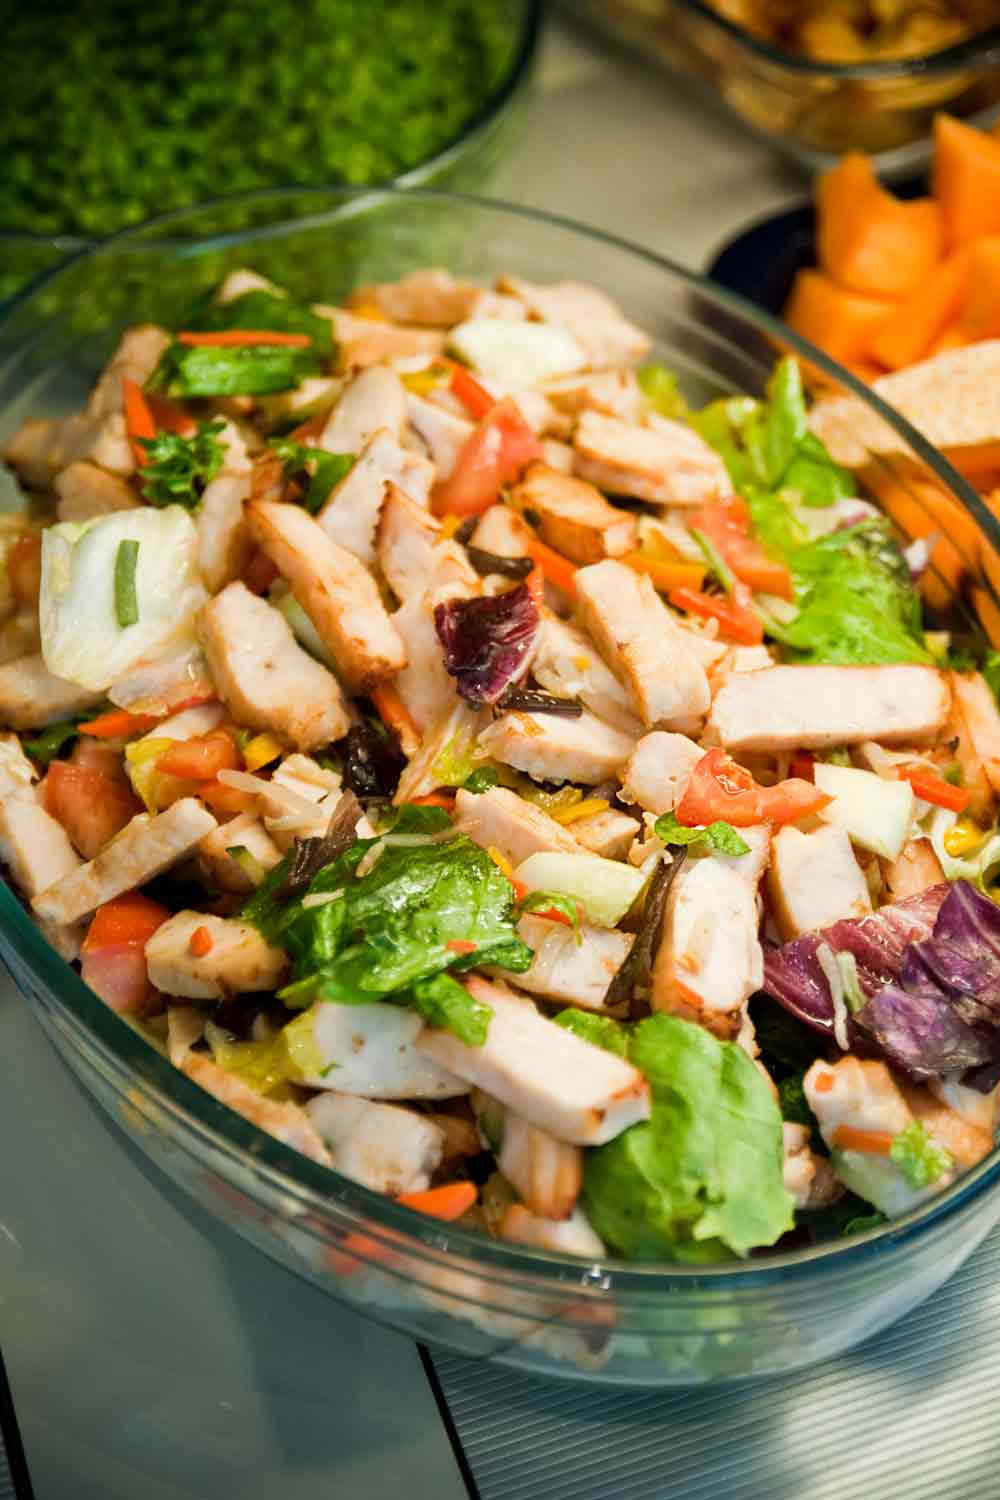 How to Make Chicken Salad?